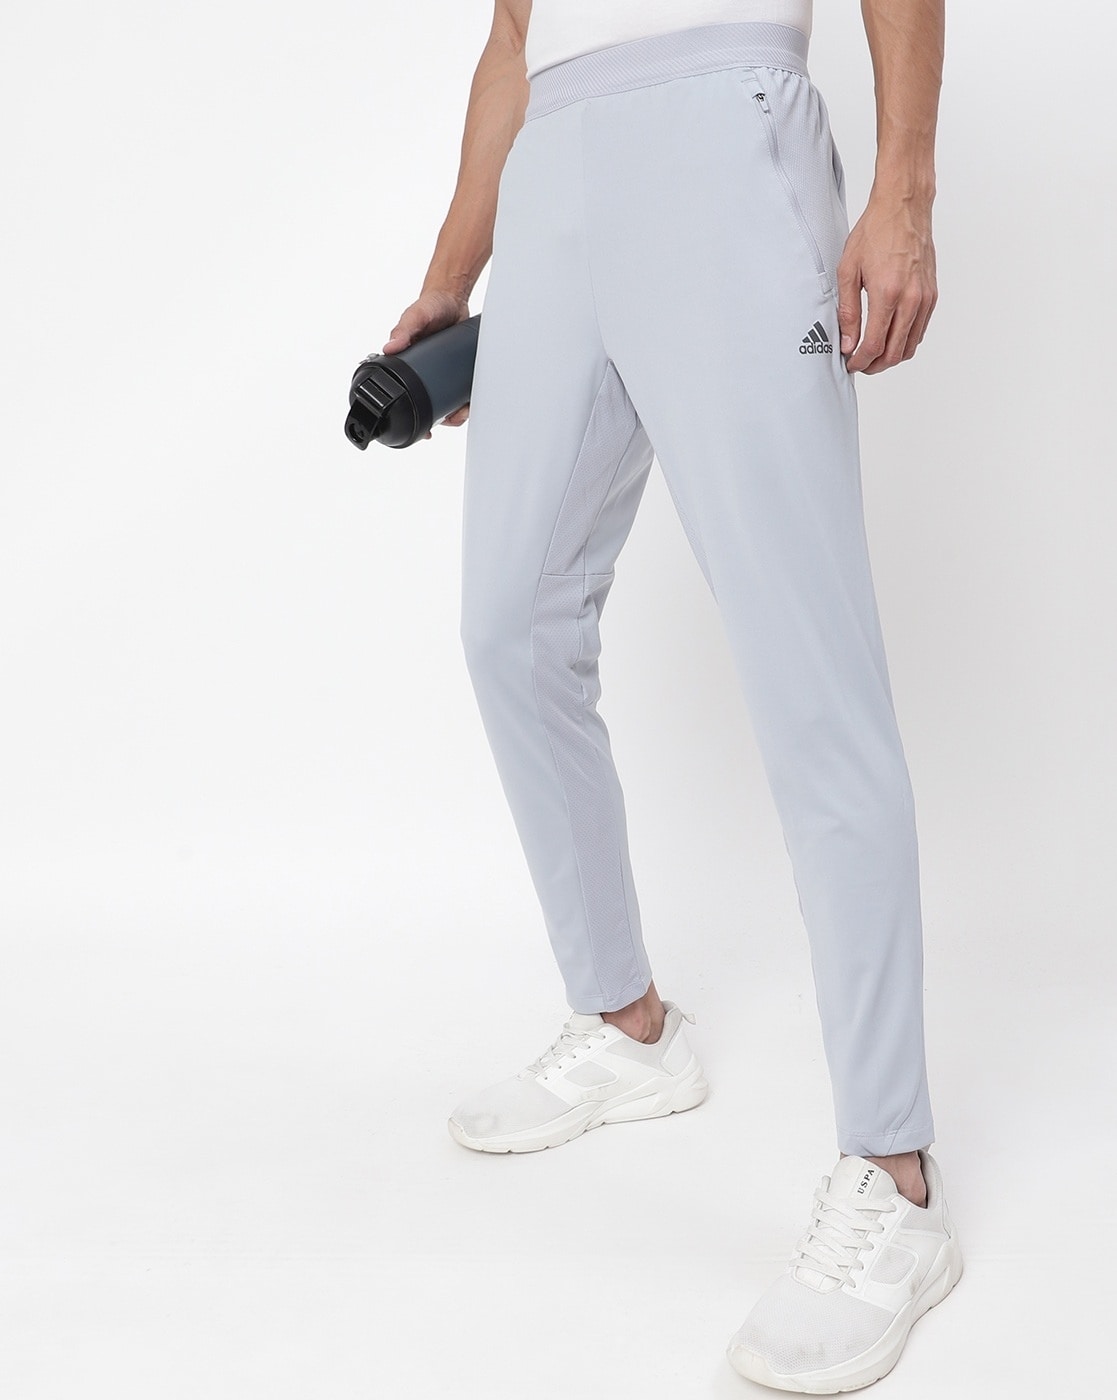 Adidas Mens Slim Fit Trackpants S1906GHTT002001MBlack WhiteMedium   Amazonin Fashion